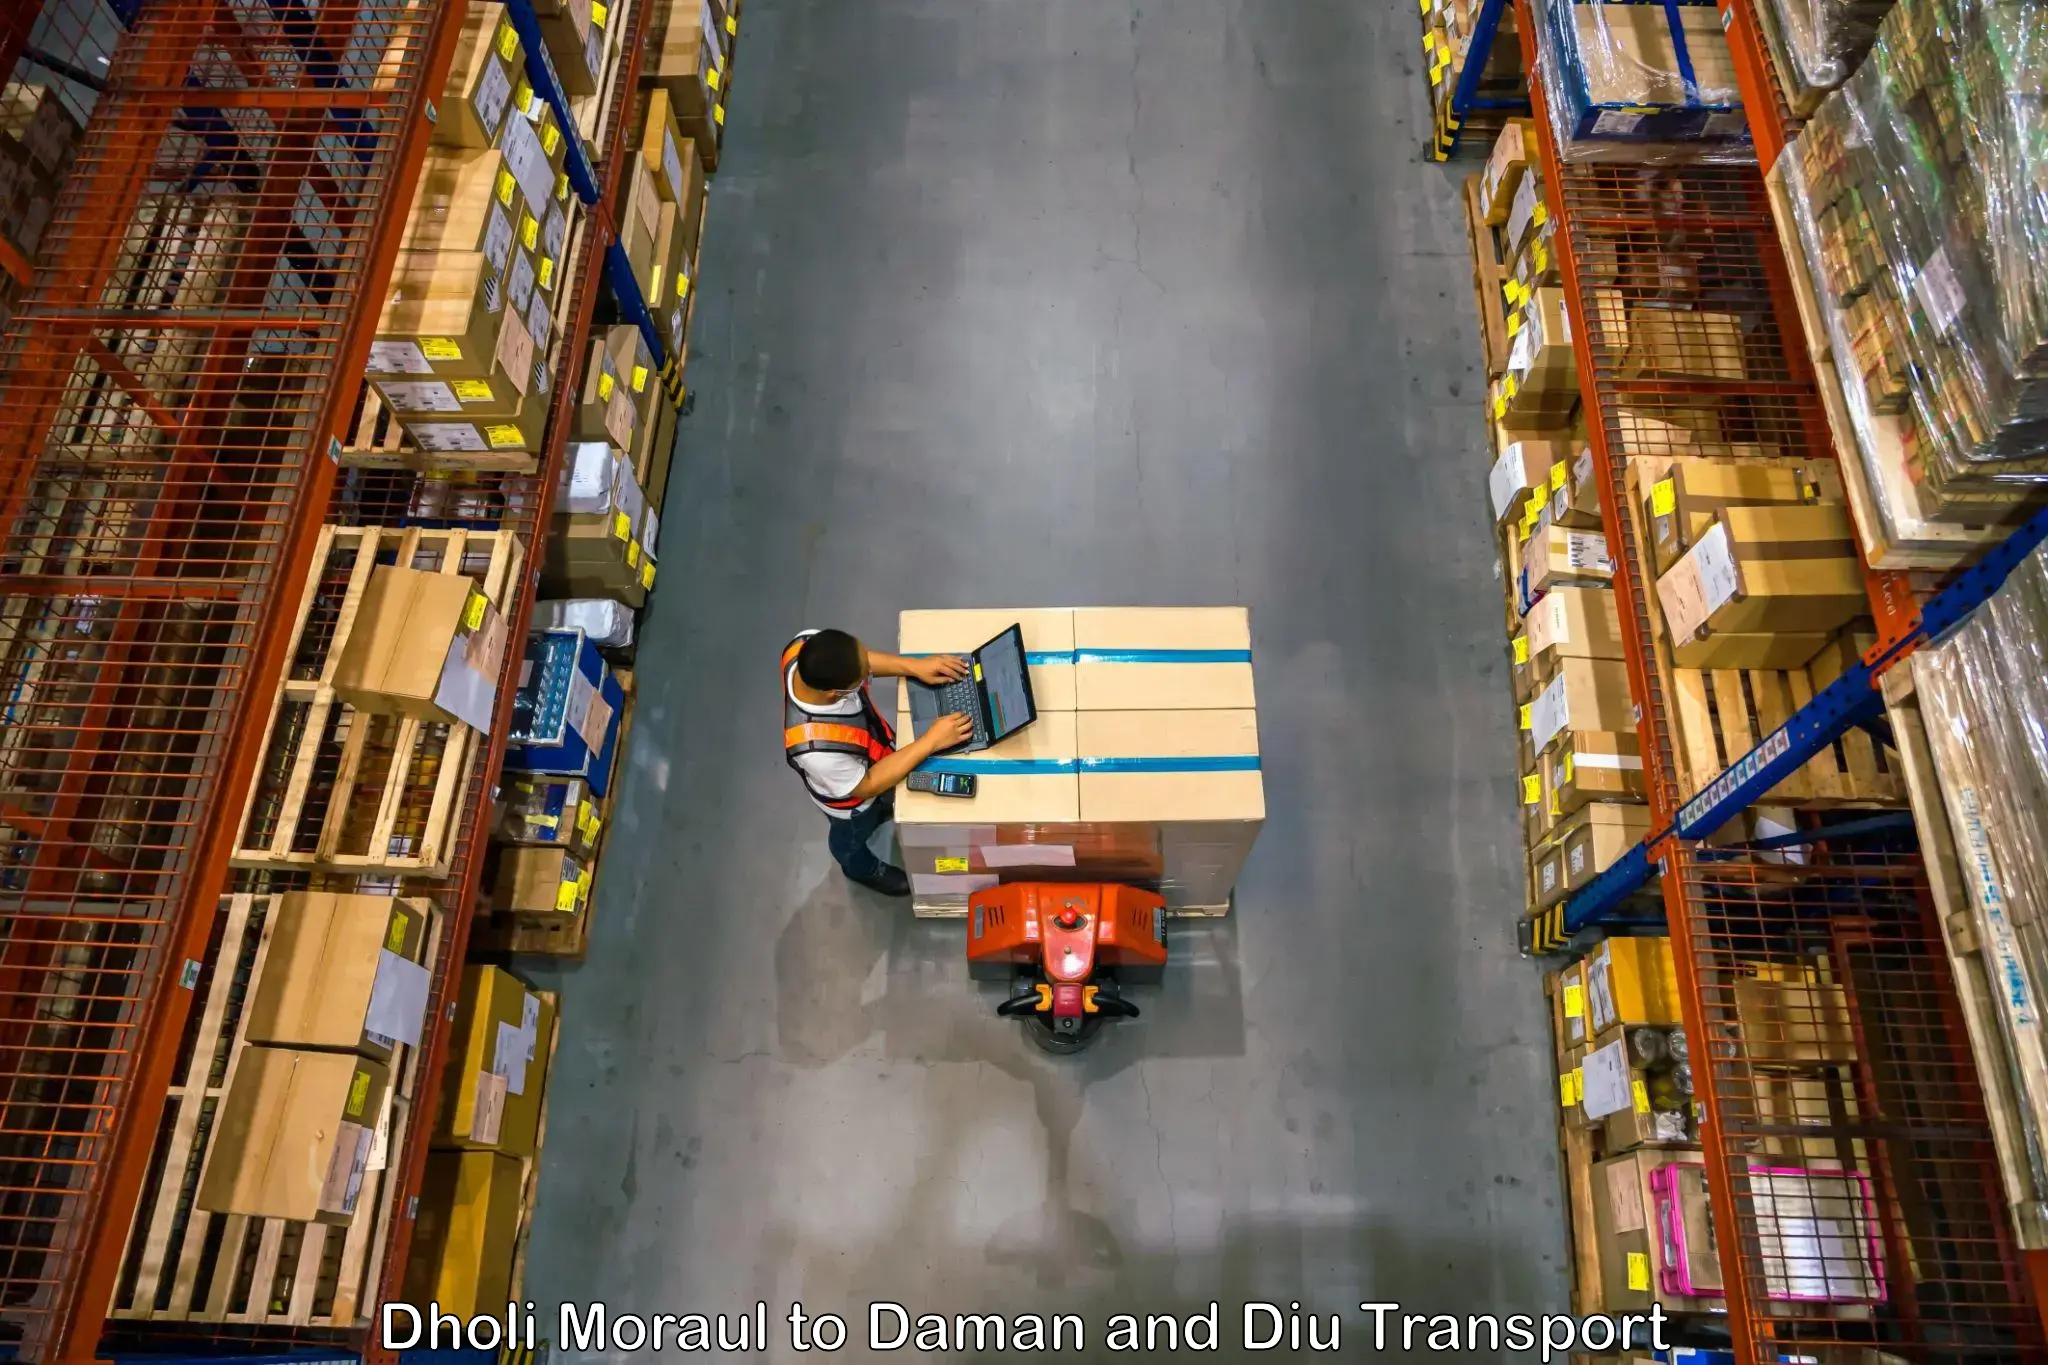 Shipping partner Dholi Moraul to Diu